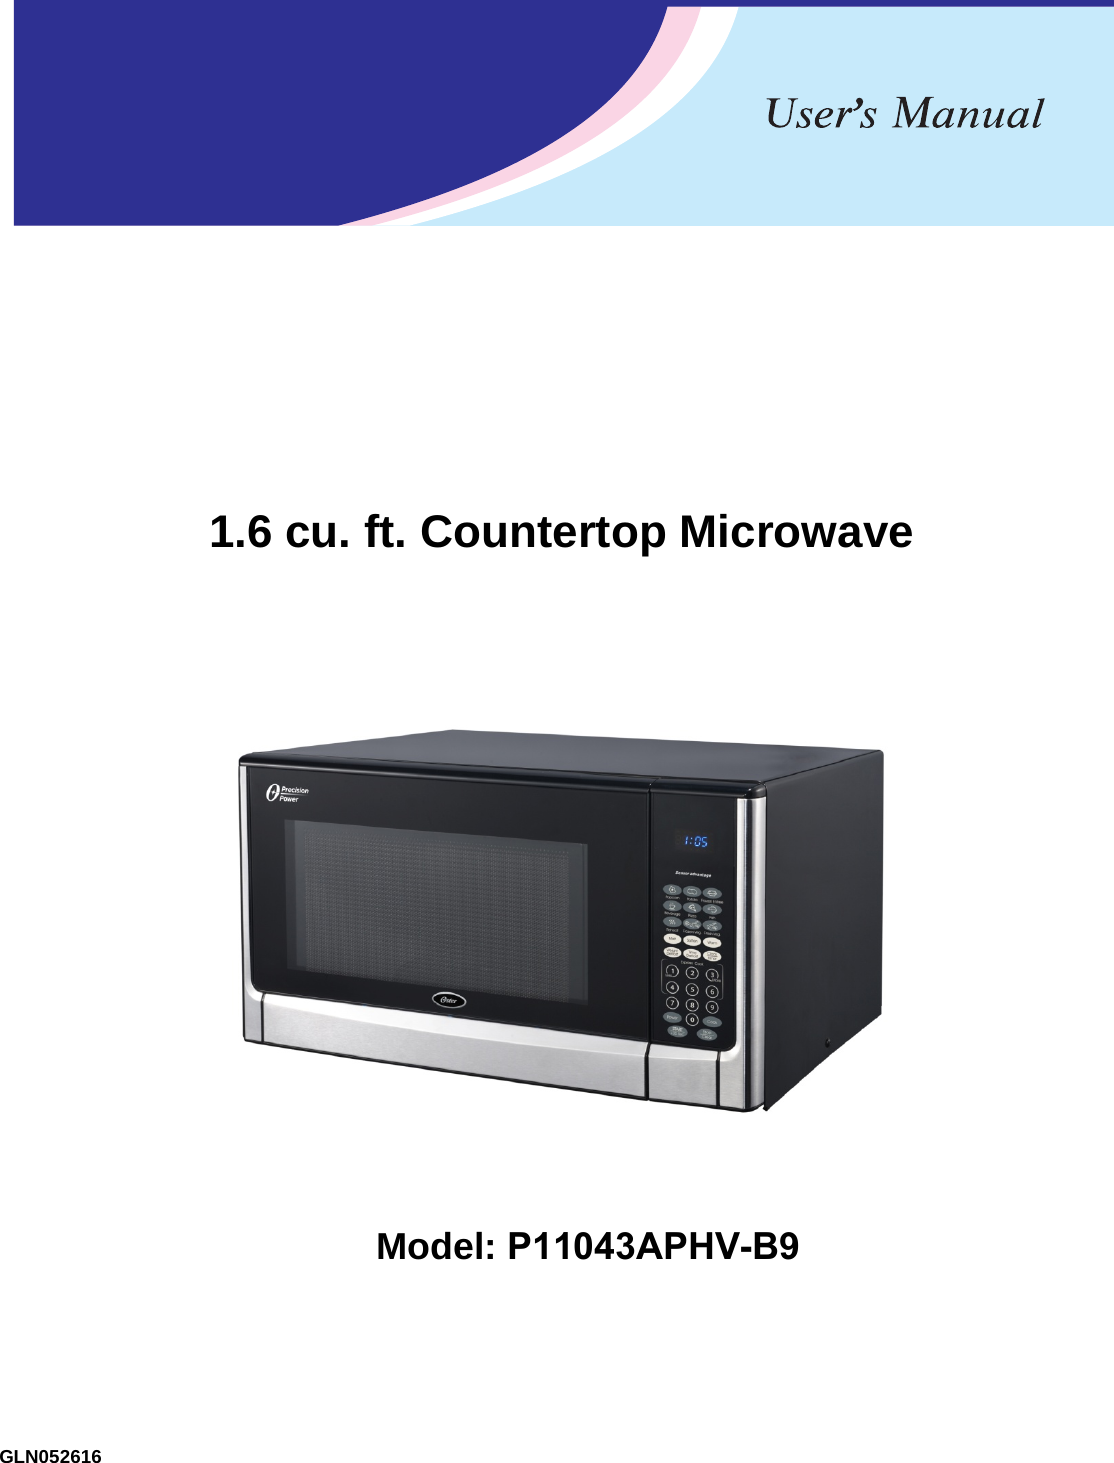 \1.6 cu. ft. Countertop Microwave Model: P11043APHV-B9 GLN052616 